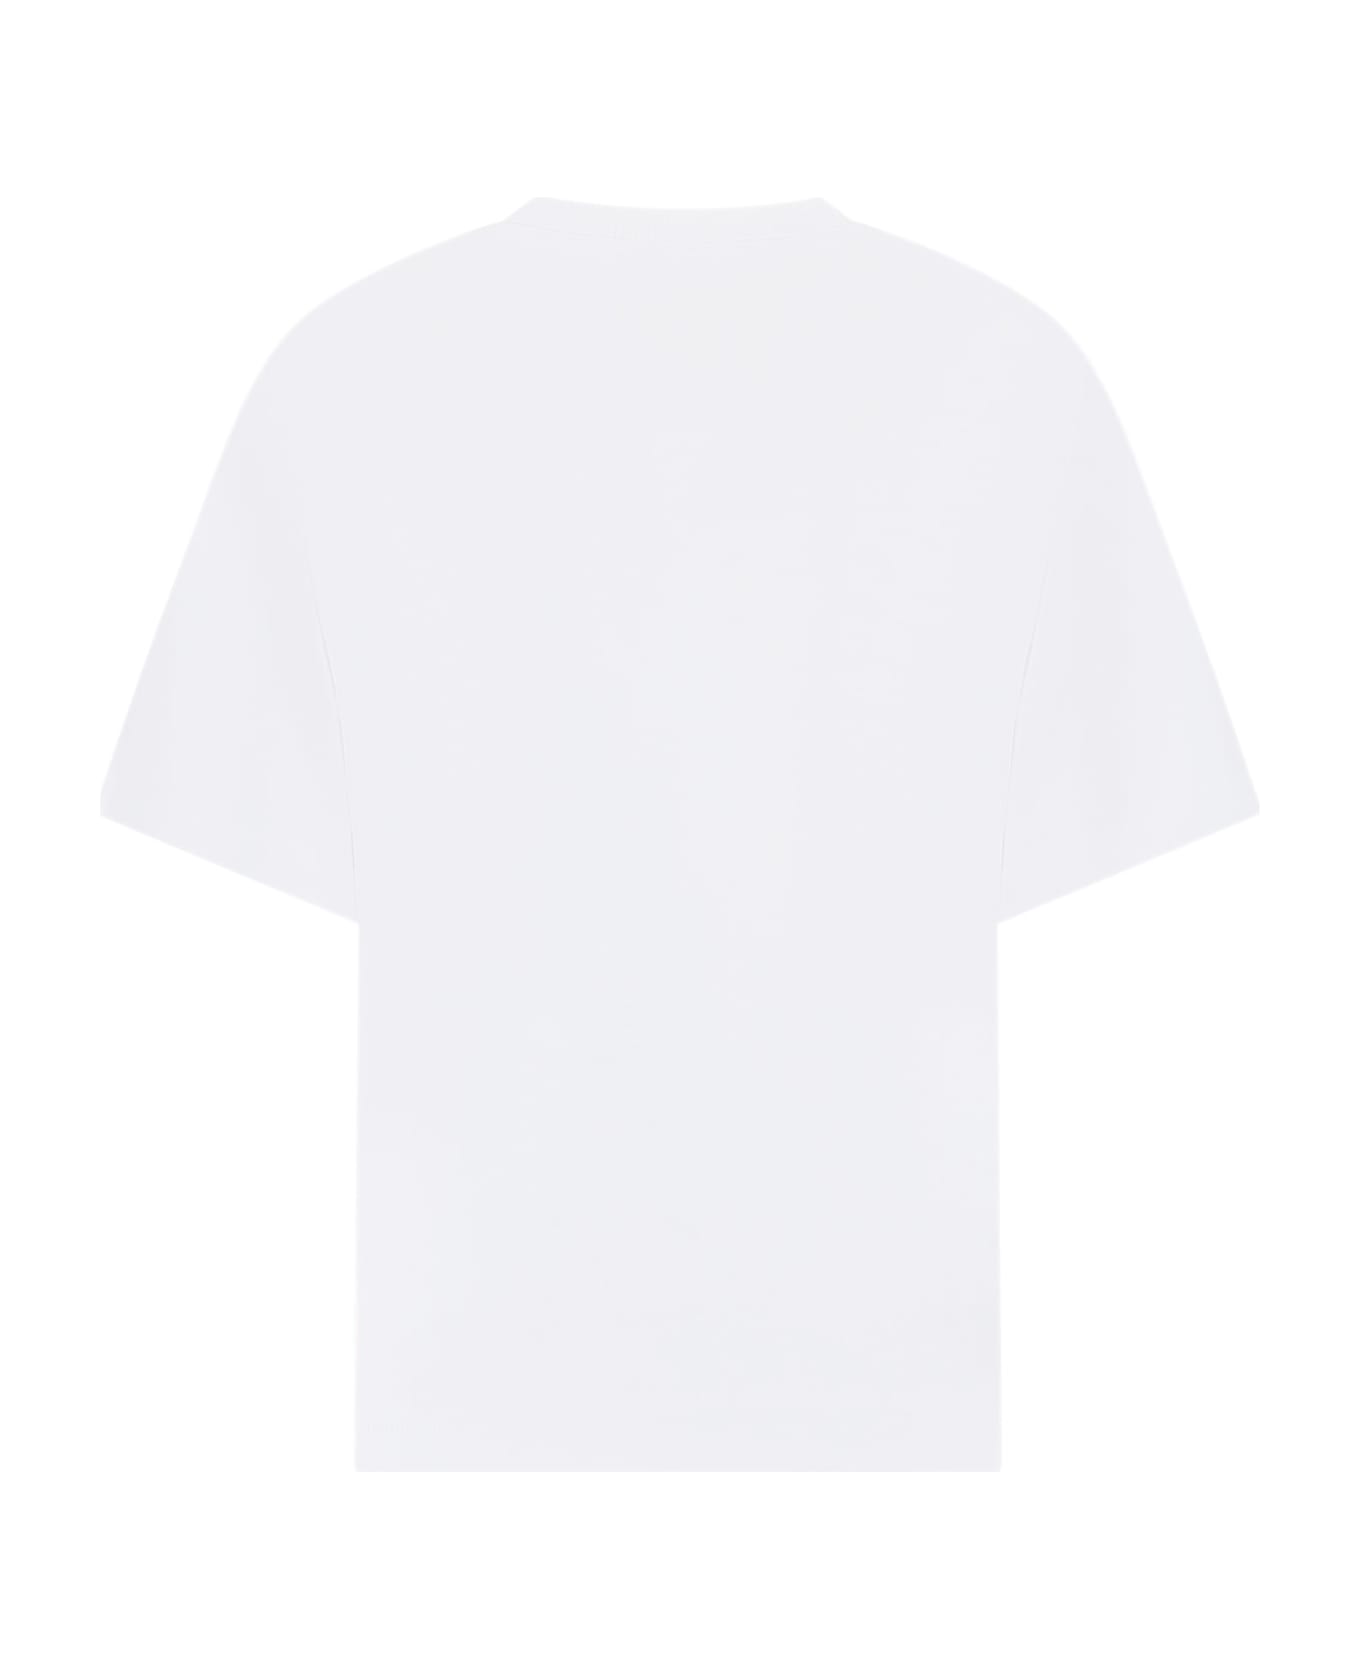 Emporio Armani White T-shirt For Boy With Smurf Print - Bianco Off White